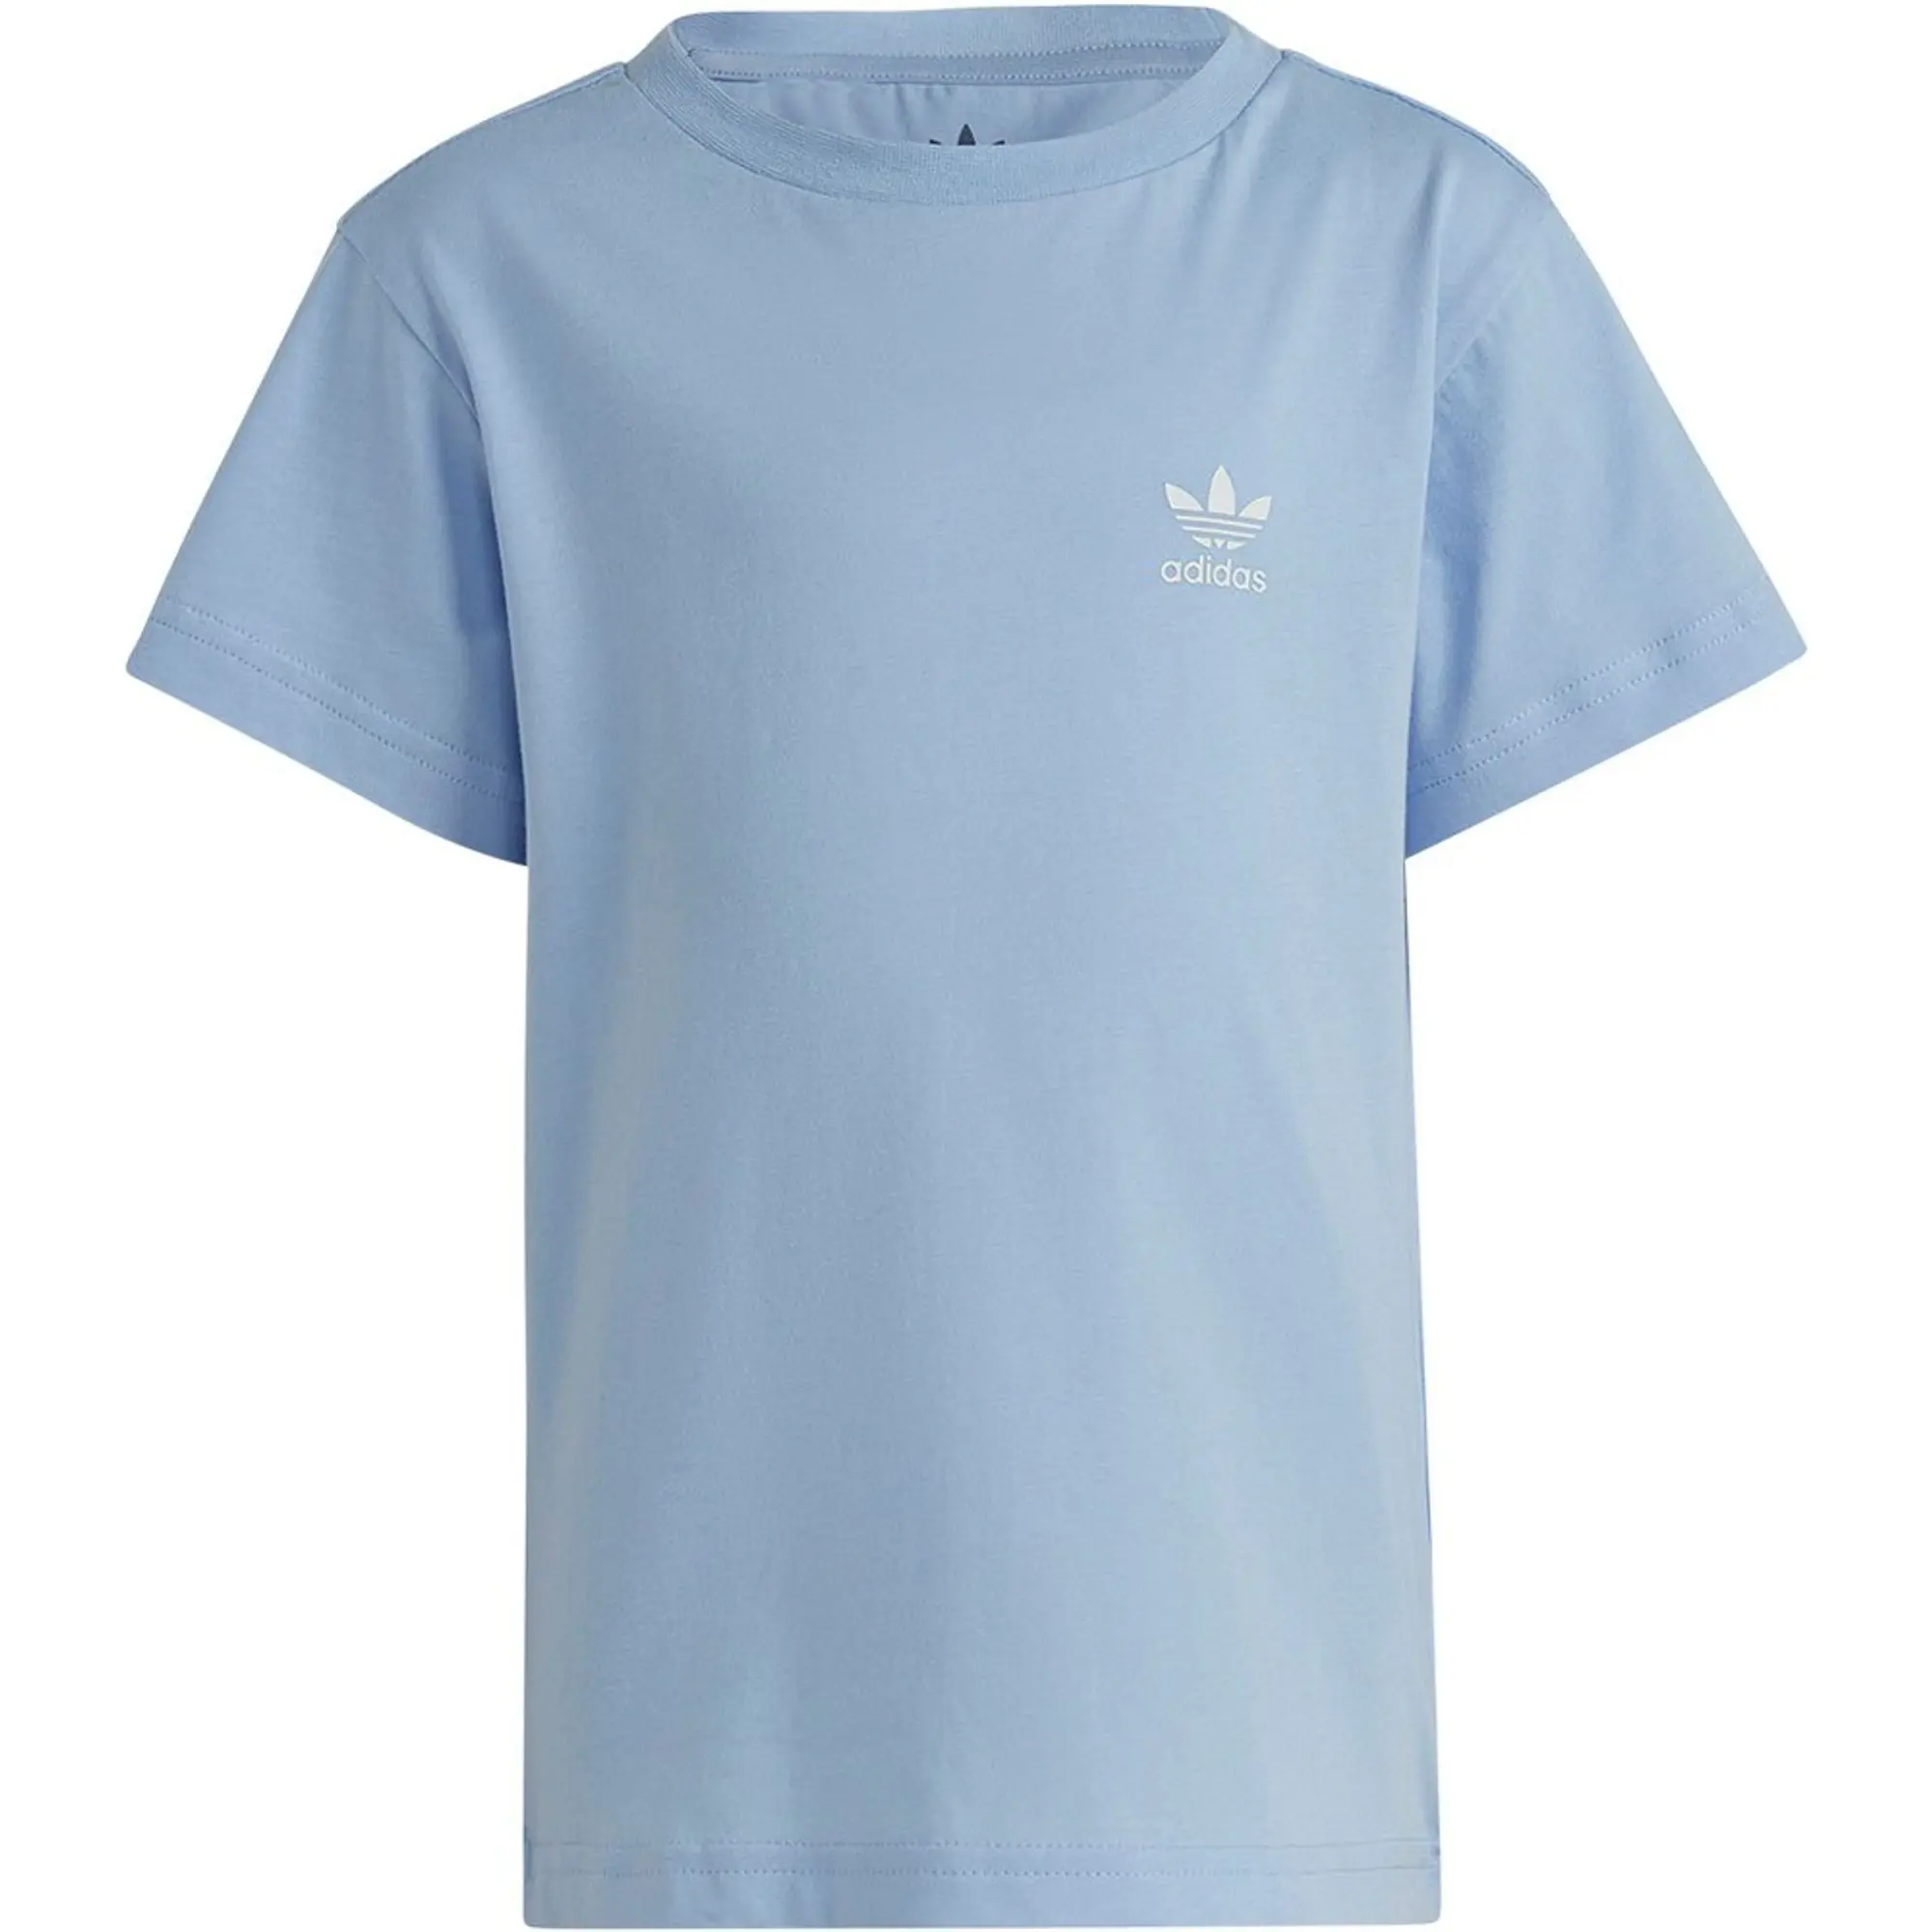 Adidas Kids Blue T-Shirt IB9905 - | Adicolor Originals